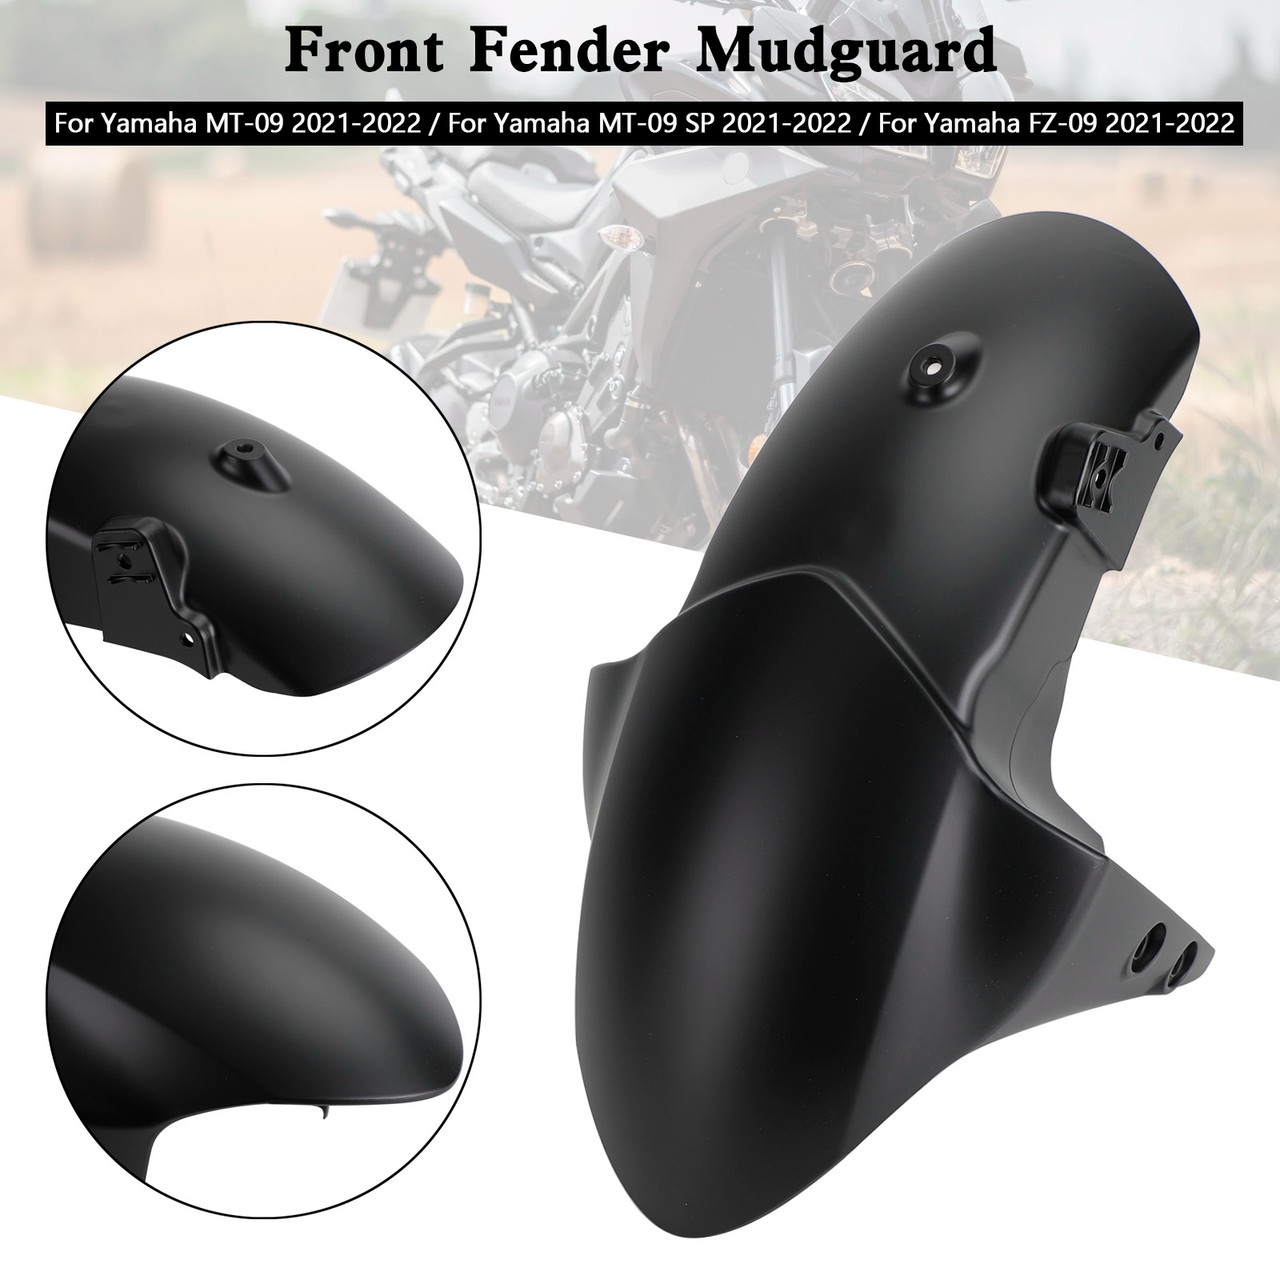 Front Fender Mudguard Fairing For Yamaha MT-09 FZ-09 MT09 SP 2021-2022 MBLACK